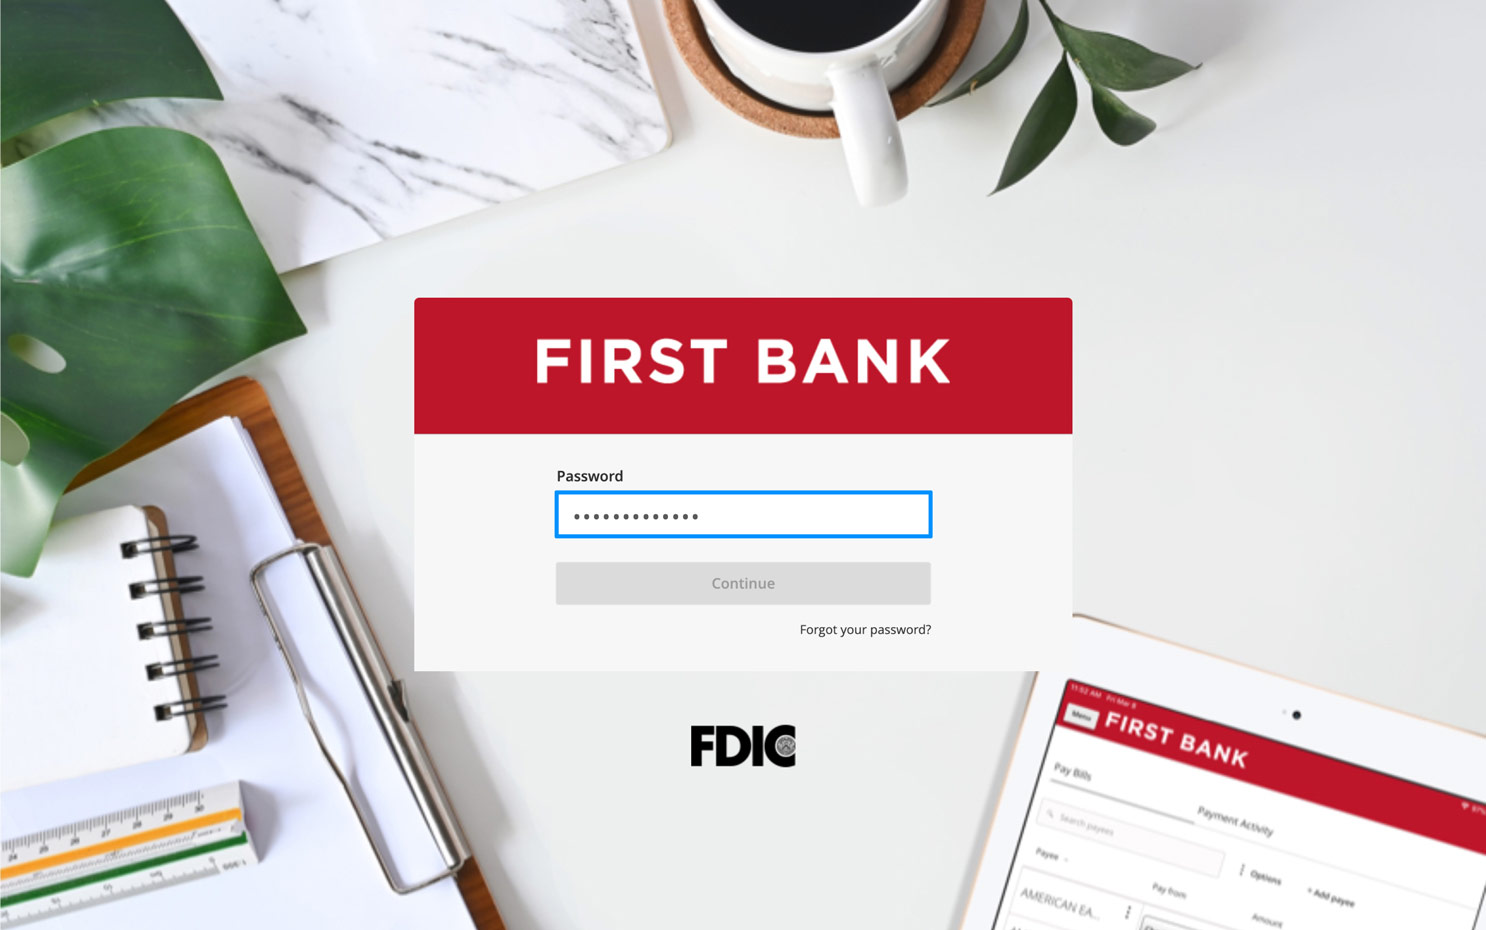 First Bank Online Banking password screen.